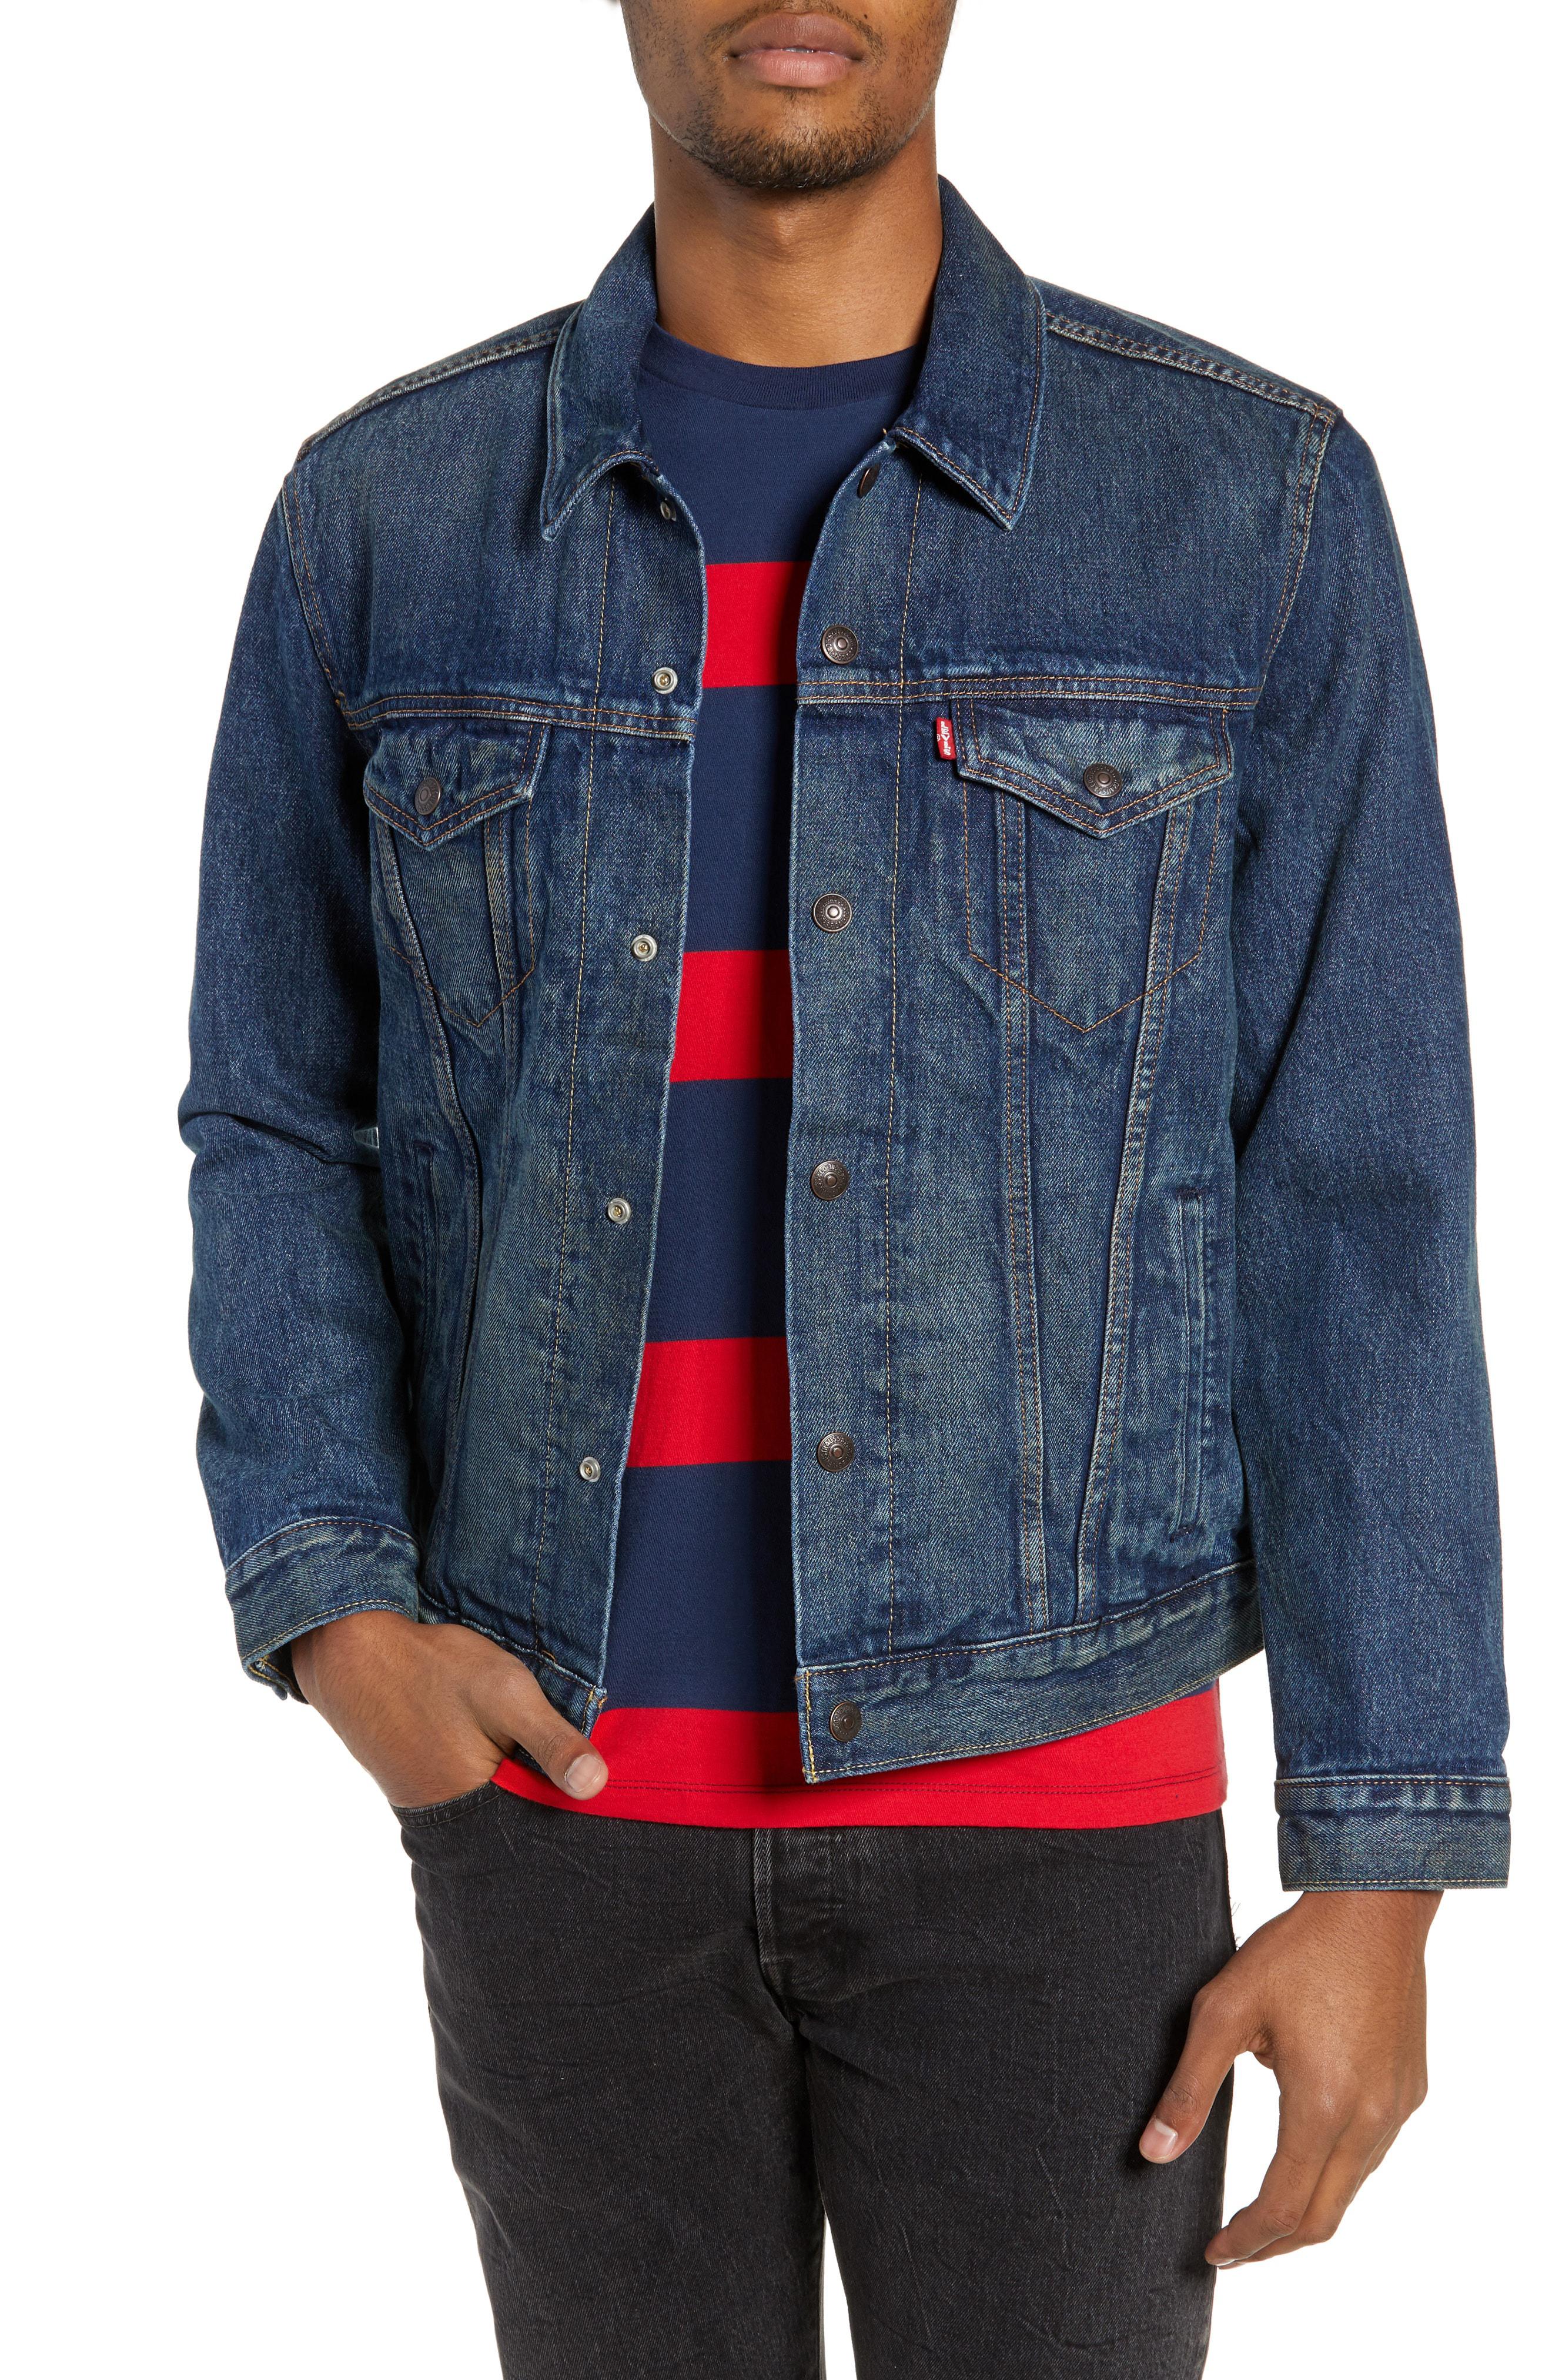 Lyst - Levi's Lined Denim Trucker Jacket in Blue for Men - Save 51%